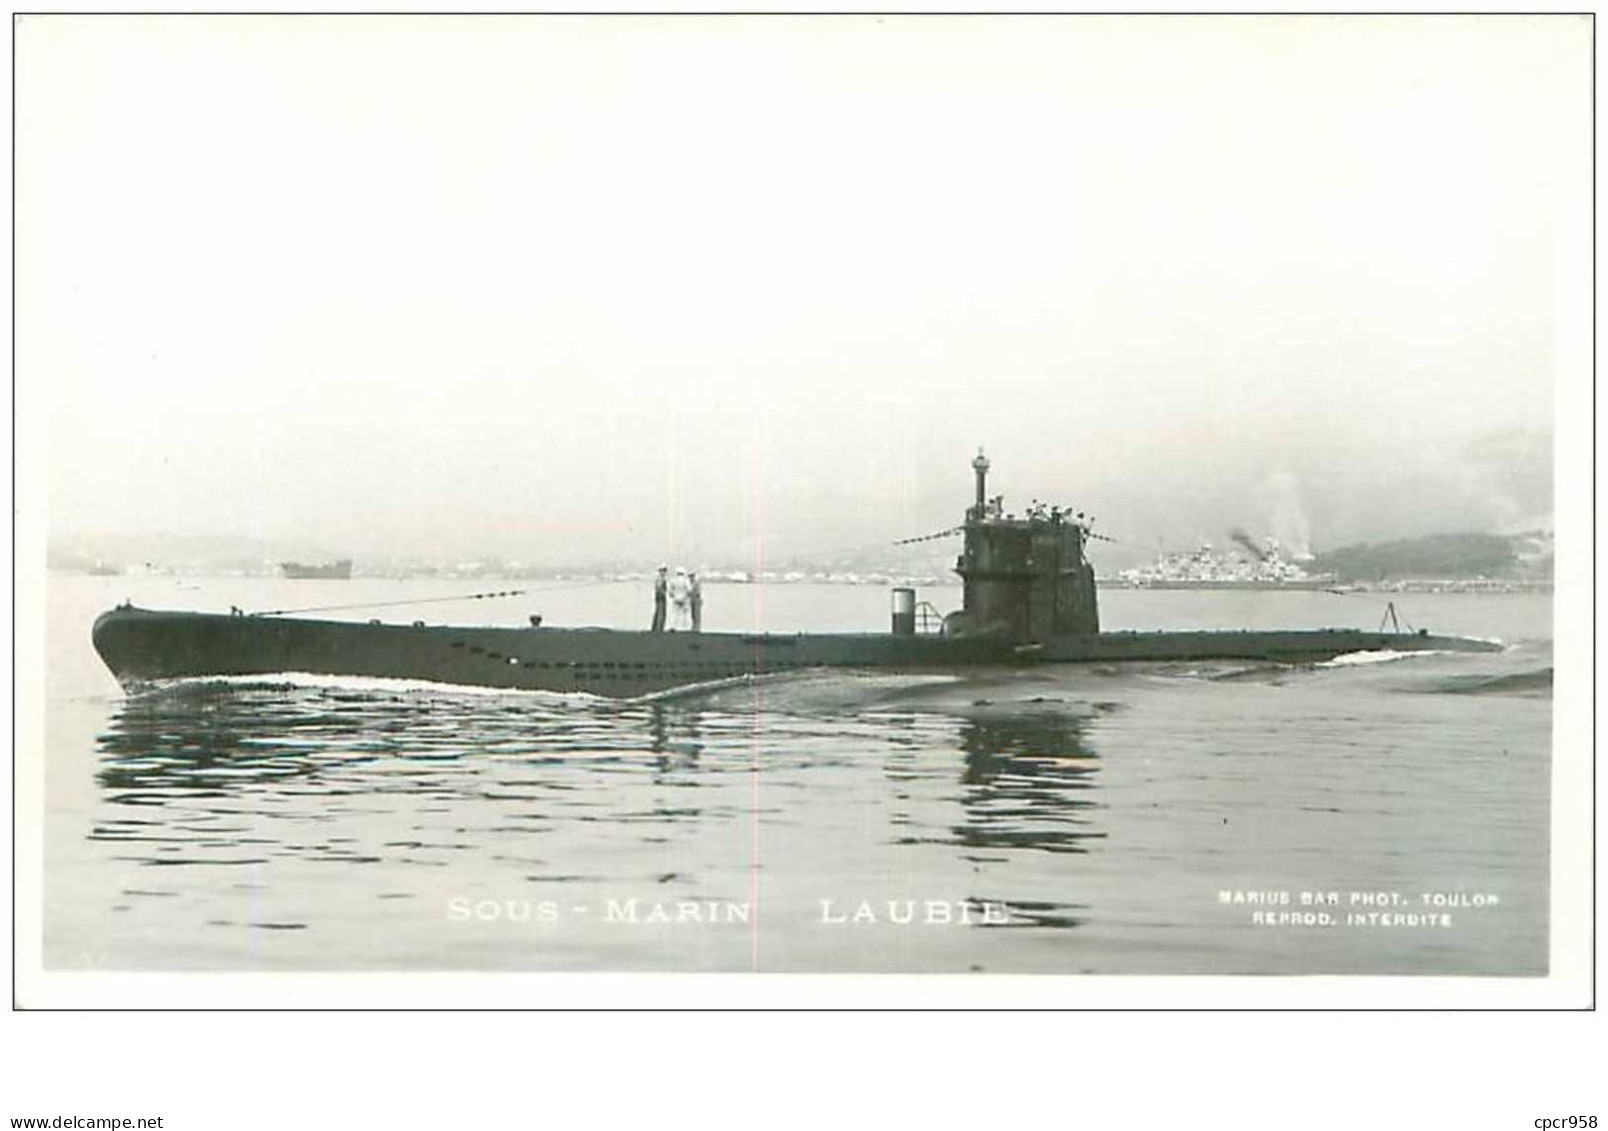 SOUS-MARINS.n°24835.PHOTO DE MARIUS BAR.LAUBIE - Submarinos